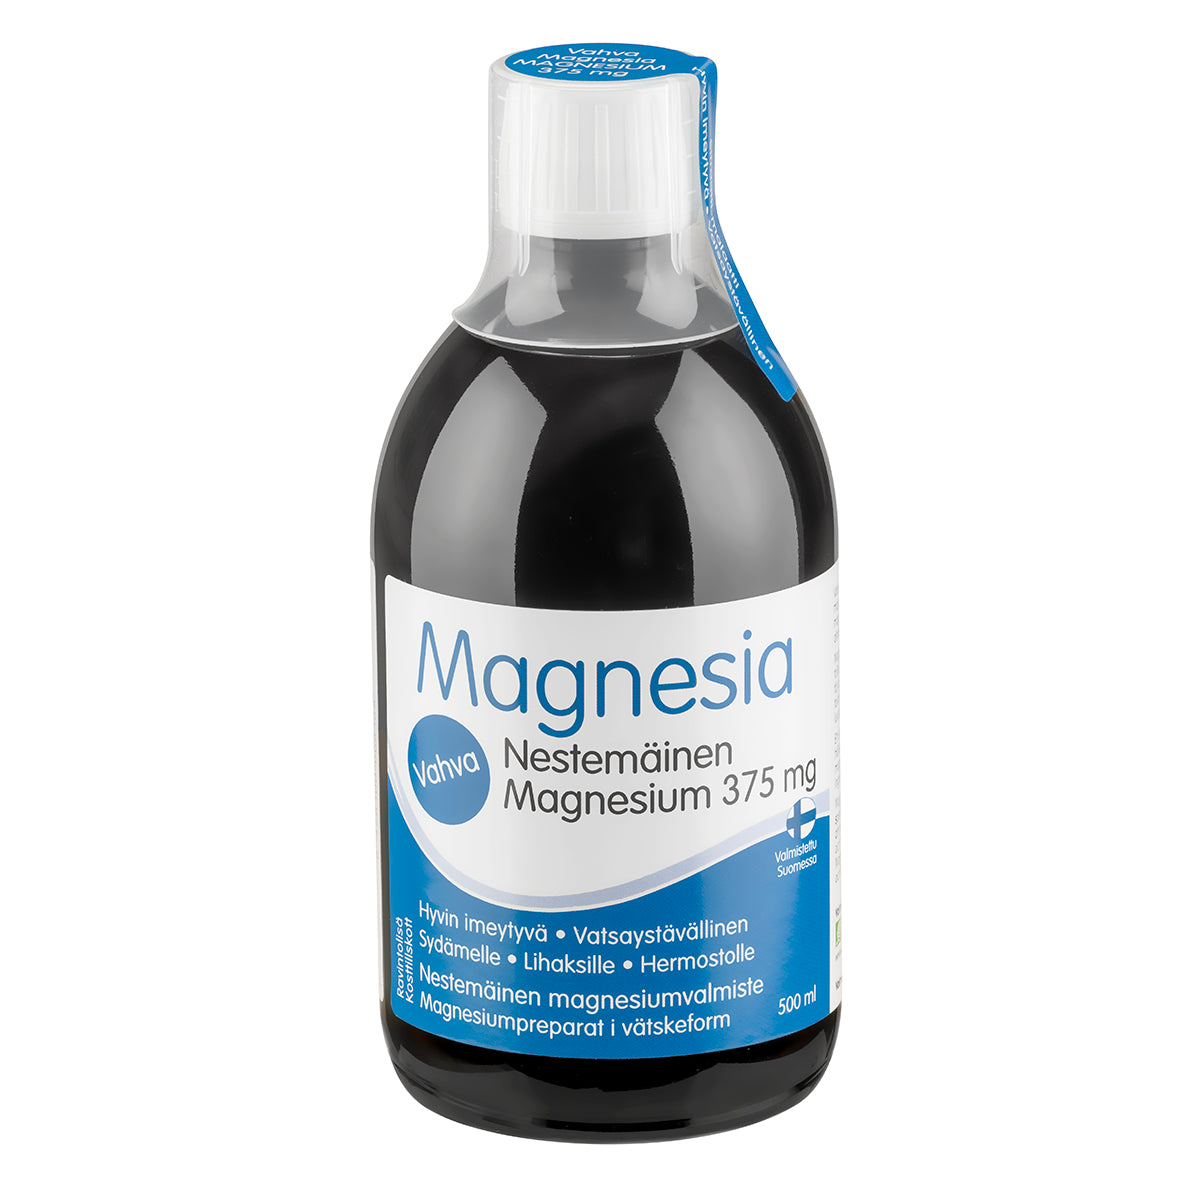 Magnesia Nestemäinen Magnesium 375 mg 500 ml